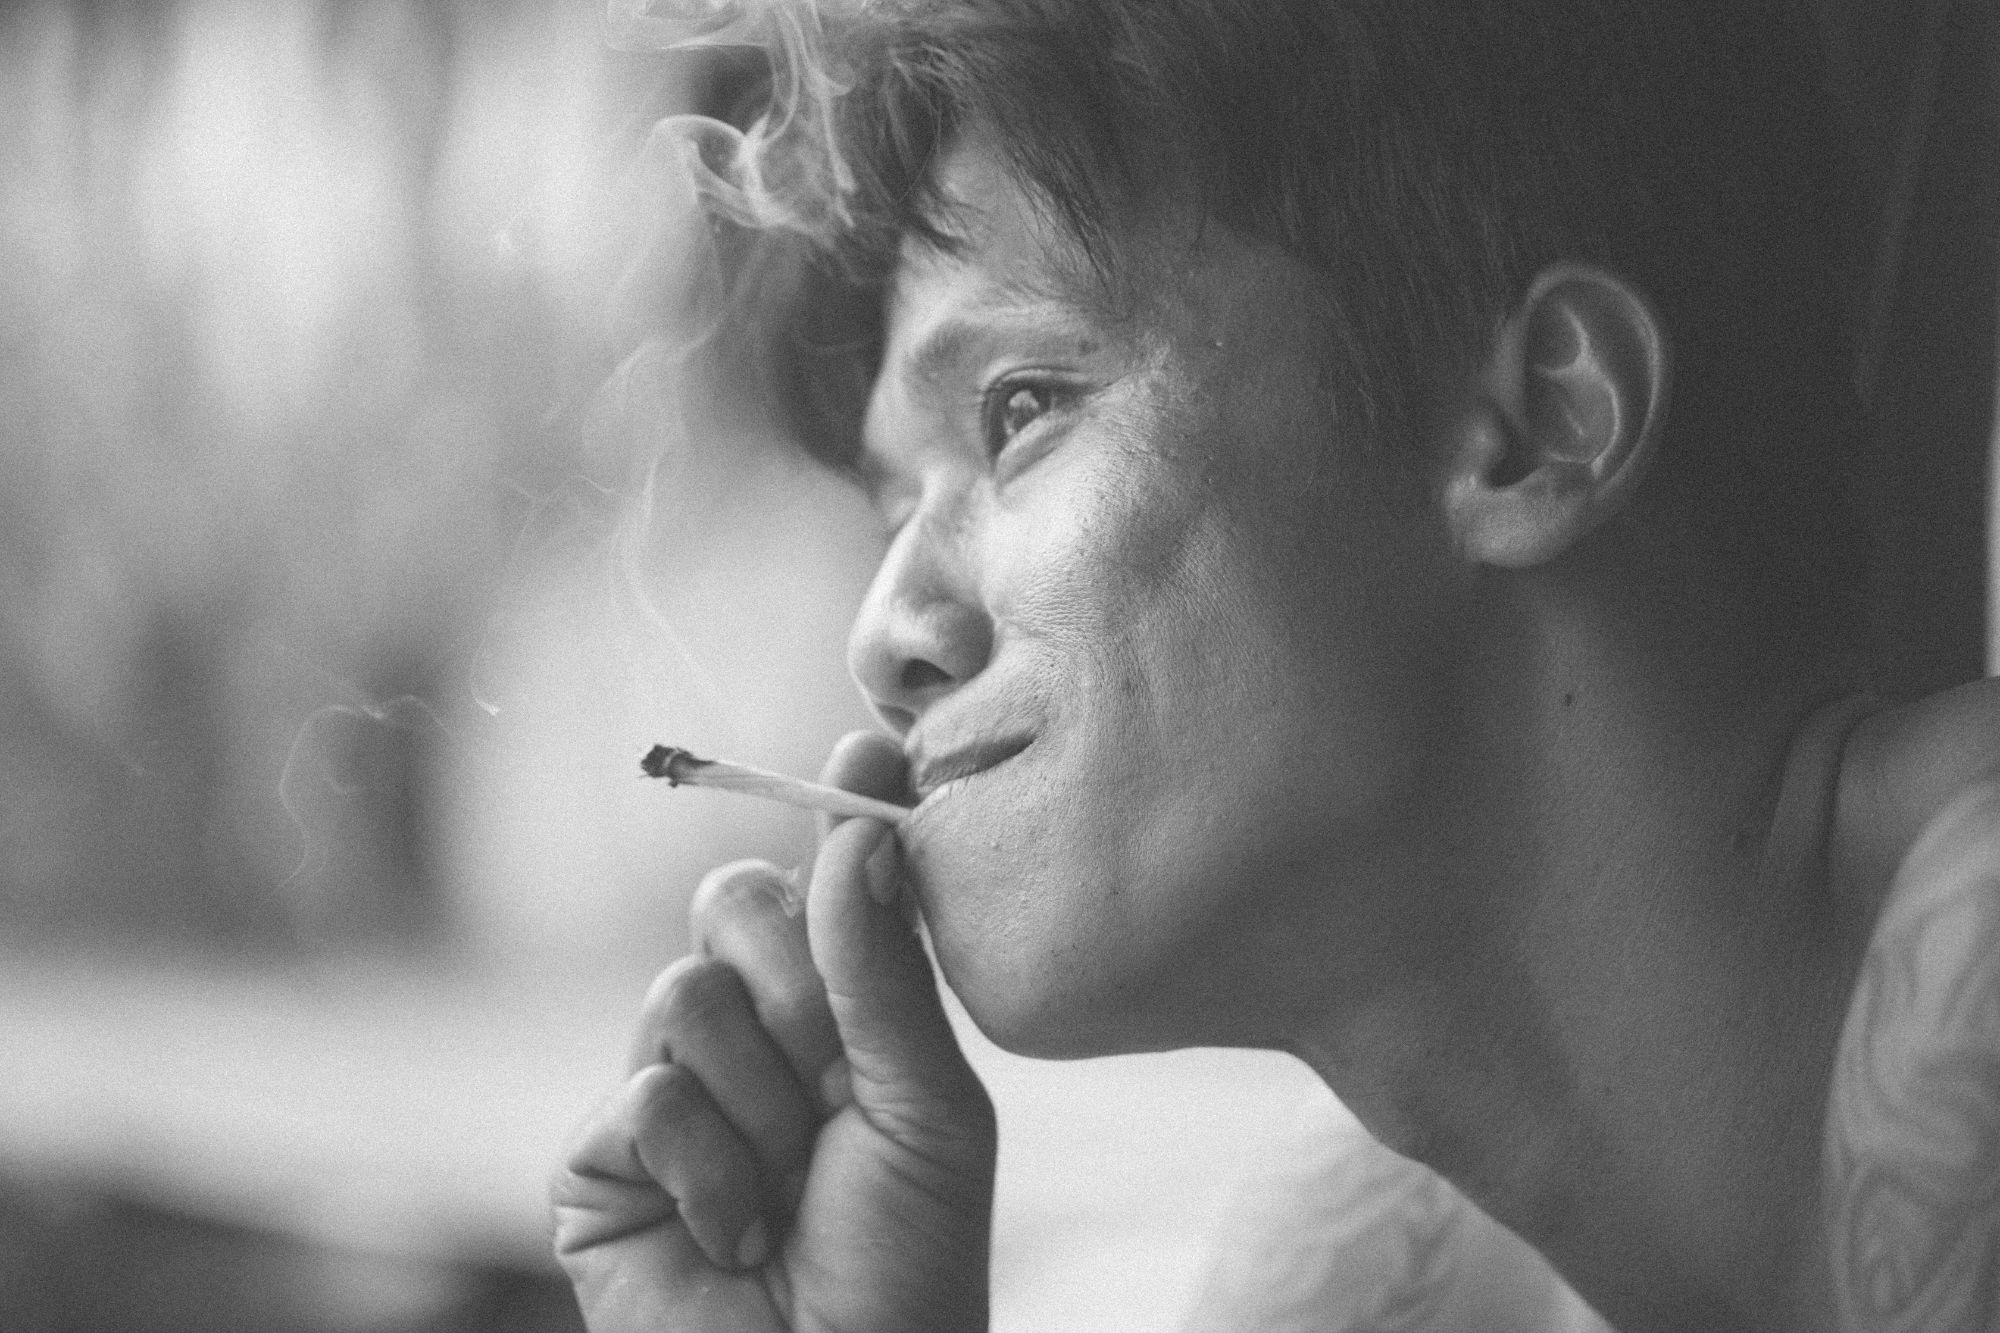 Thai man smoking cigarette.